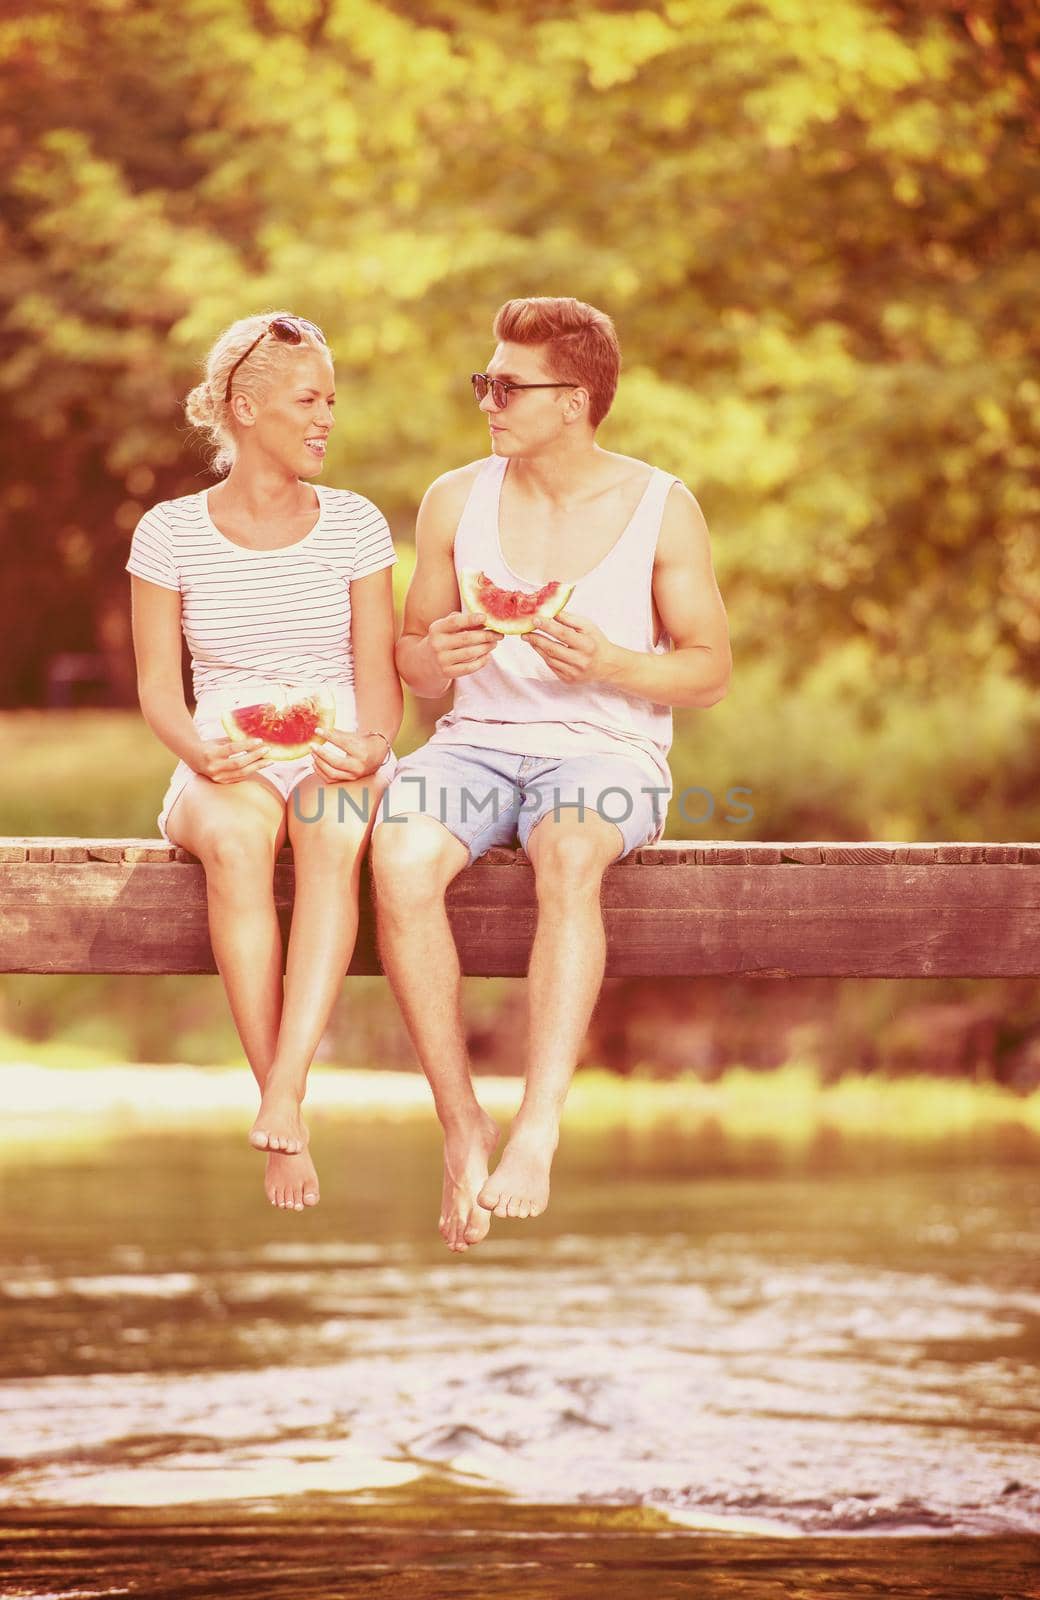 couple enjoying watermelon while sitting on the wooden bridge by dotshock